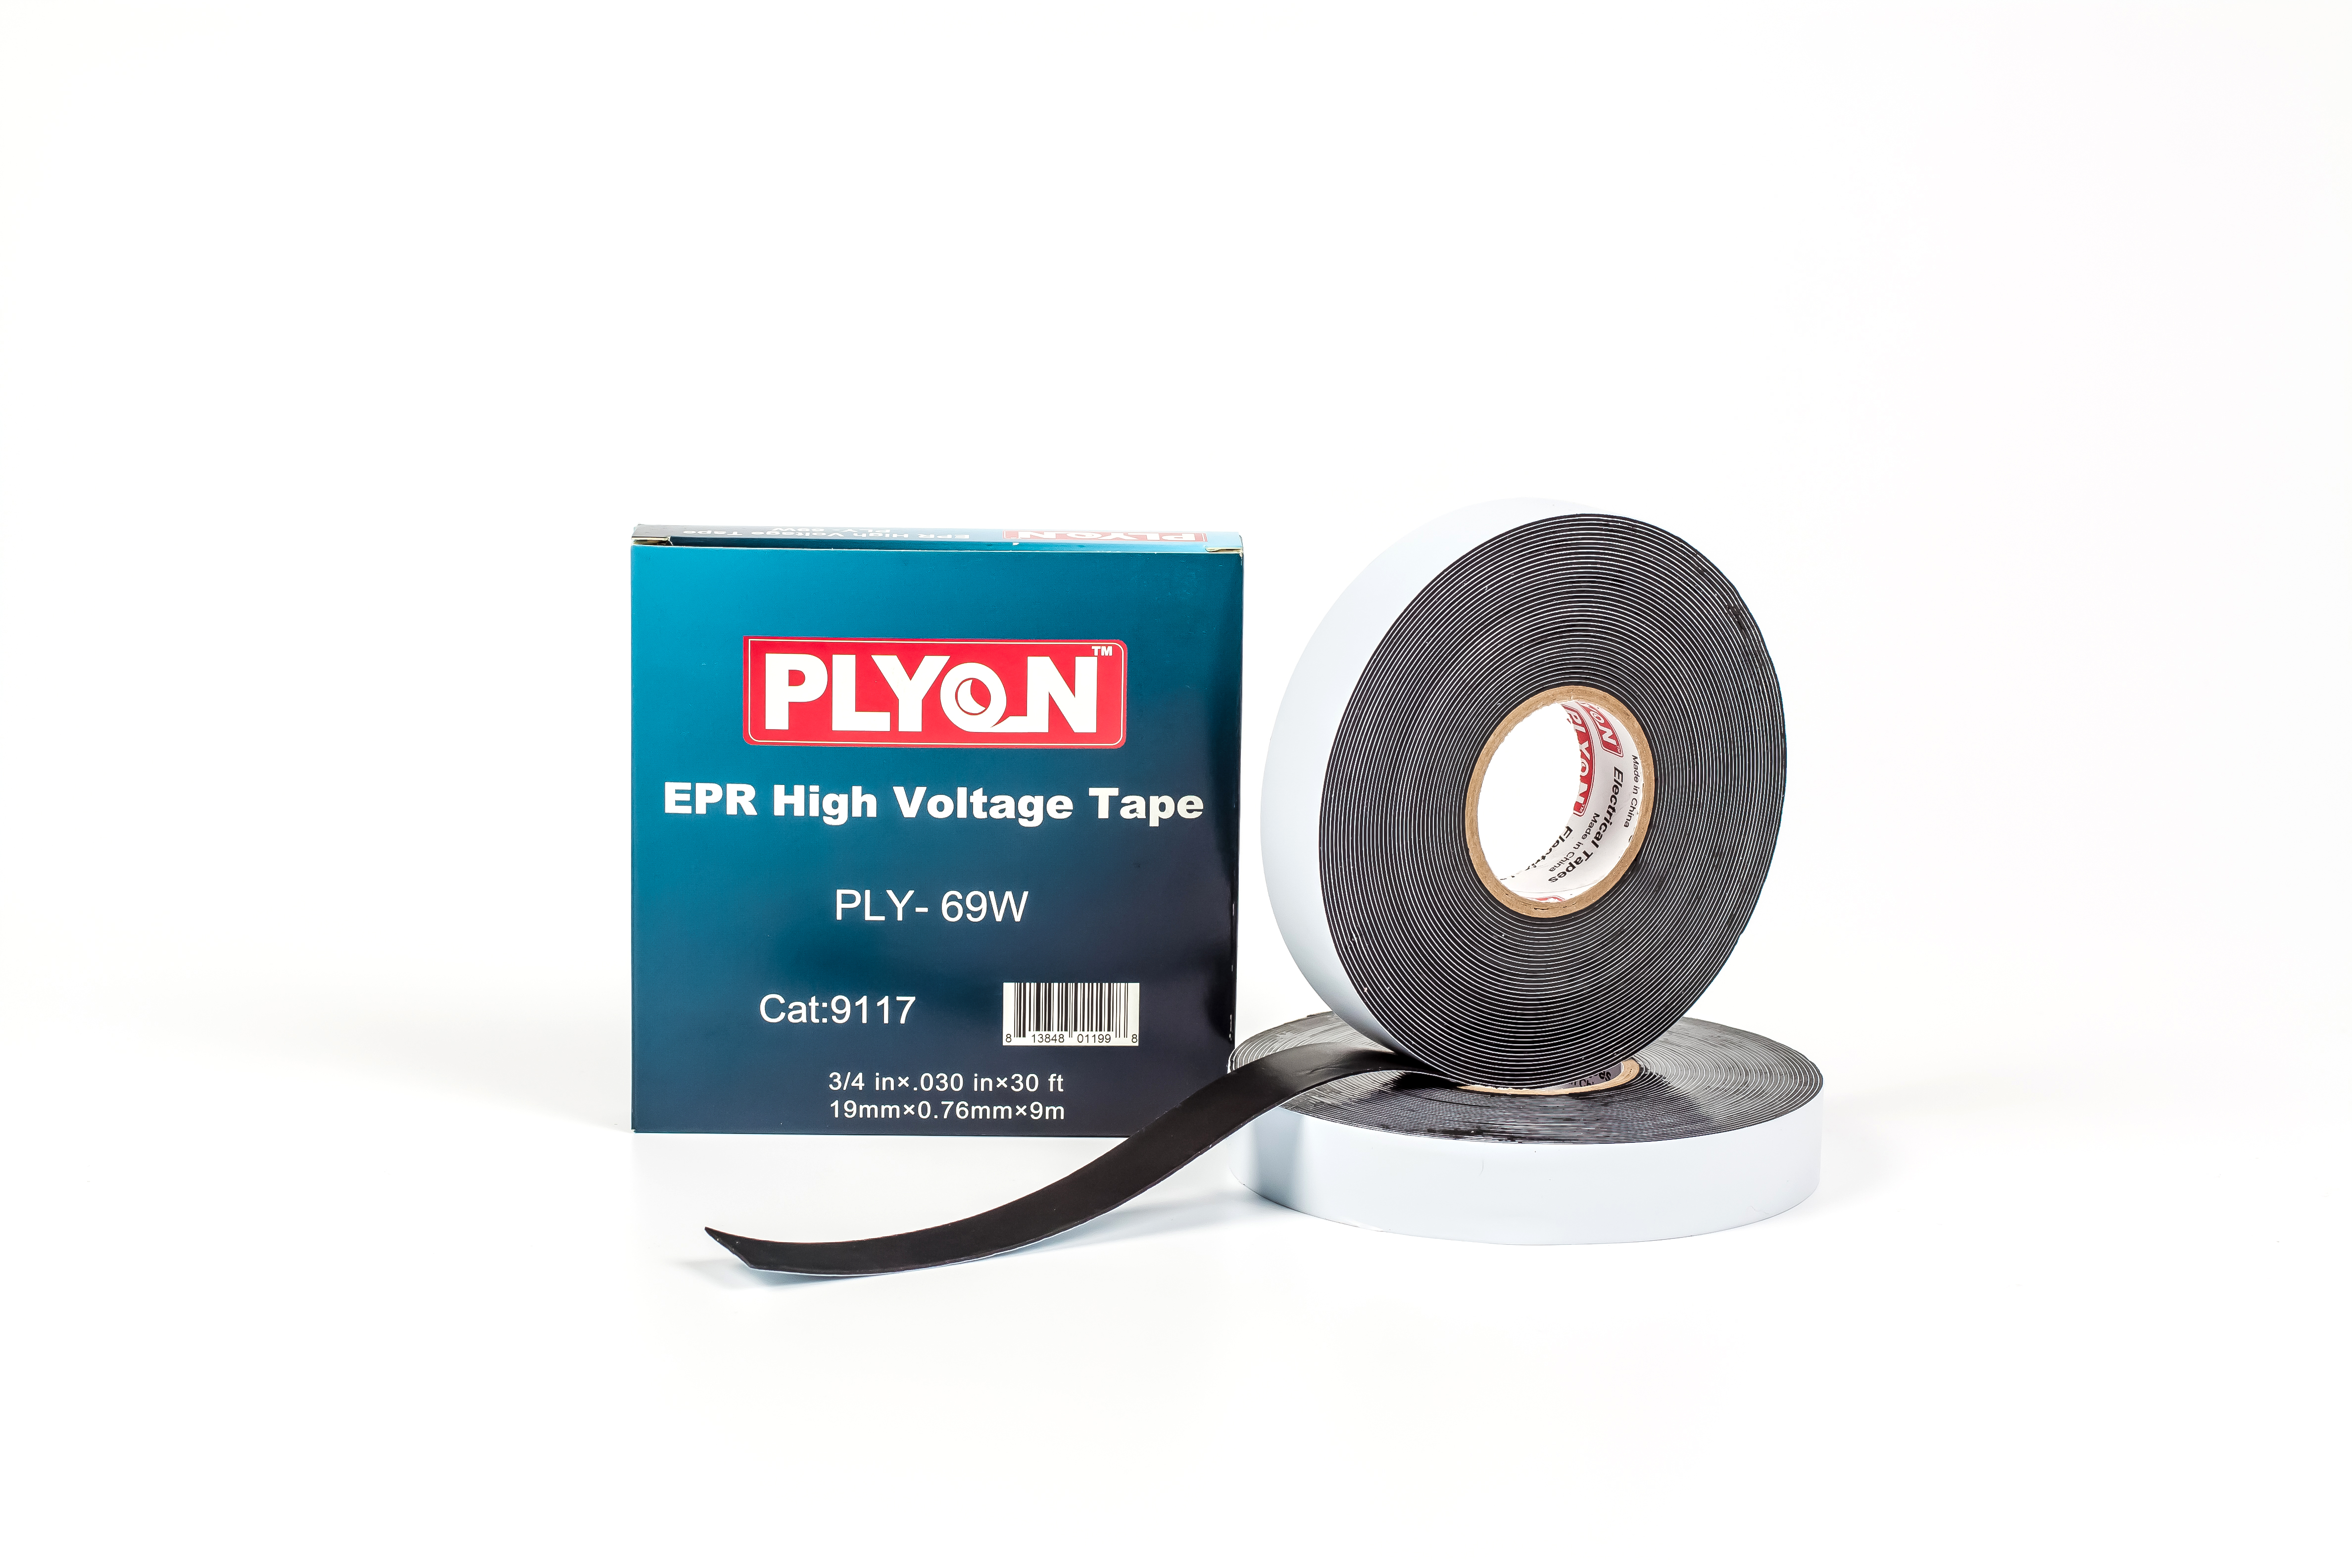 ply-69w EPR high voltage tape